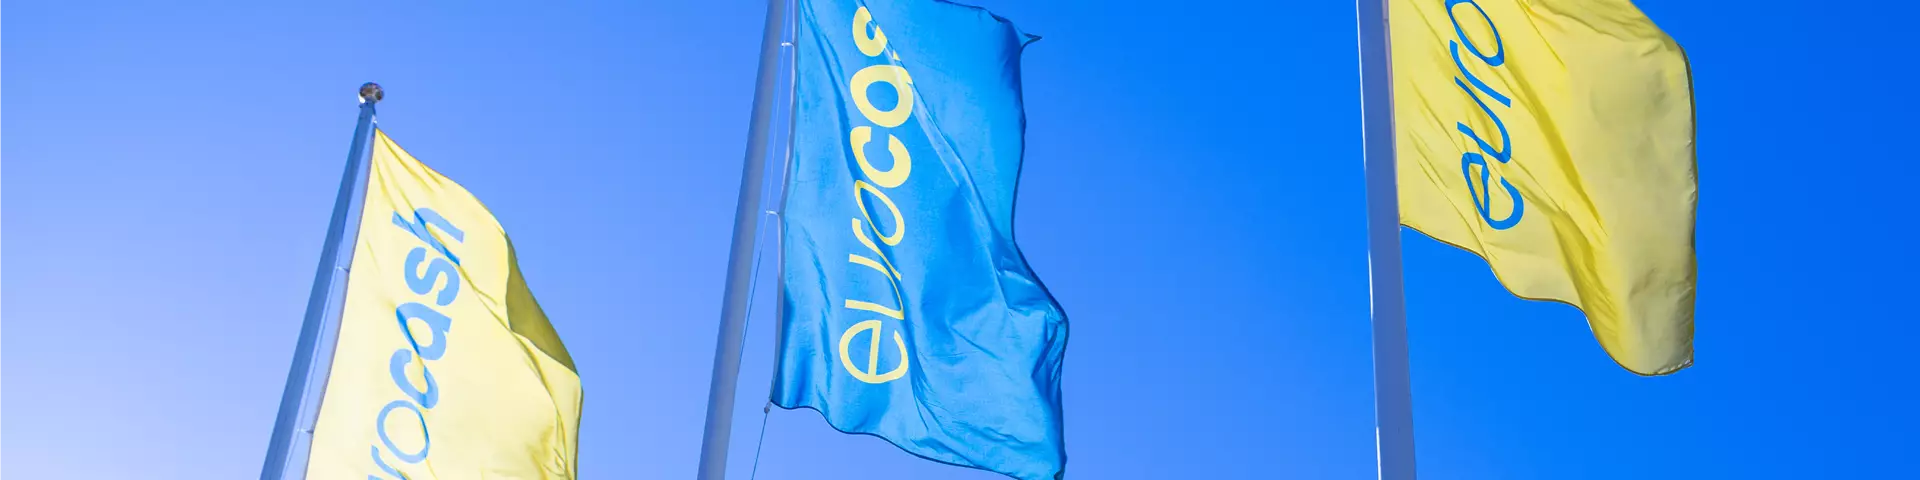 Eurocash-flaggor som vajar i vinden mot en blå himmel